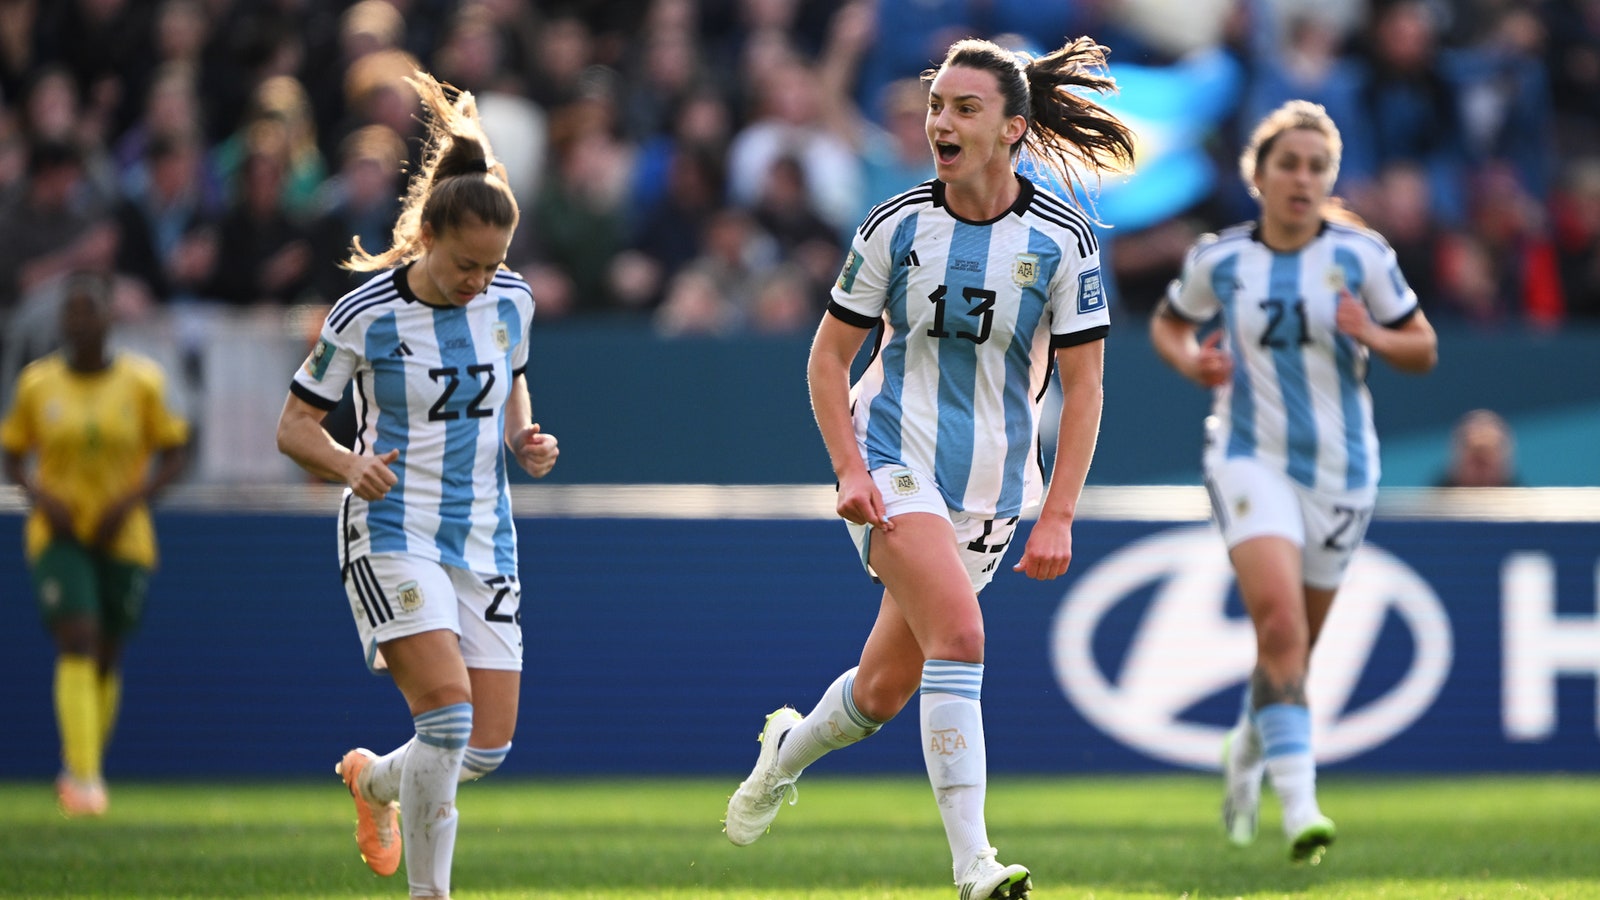 Argentina's Sophia Braun scores goal vs. South Africa in 74'